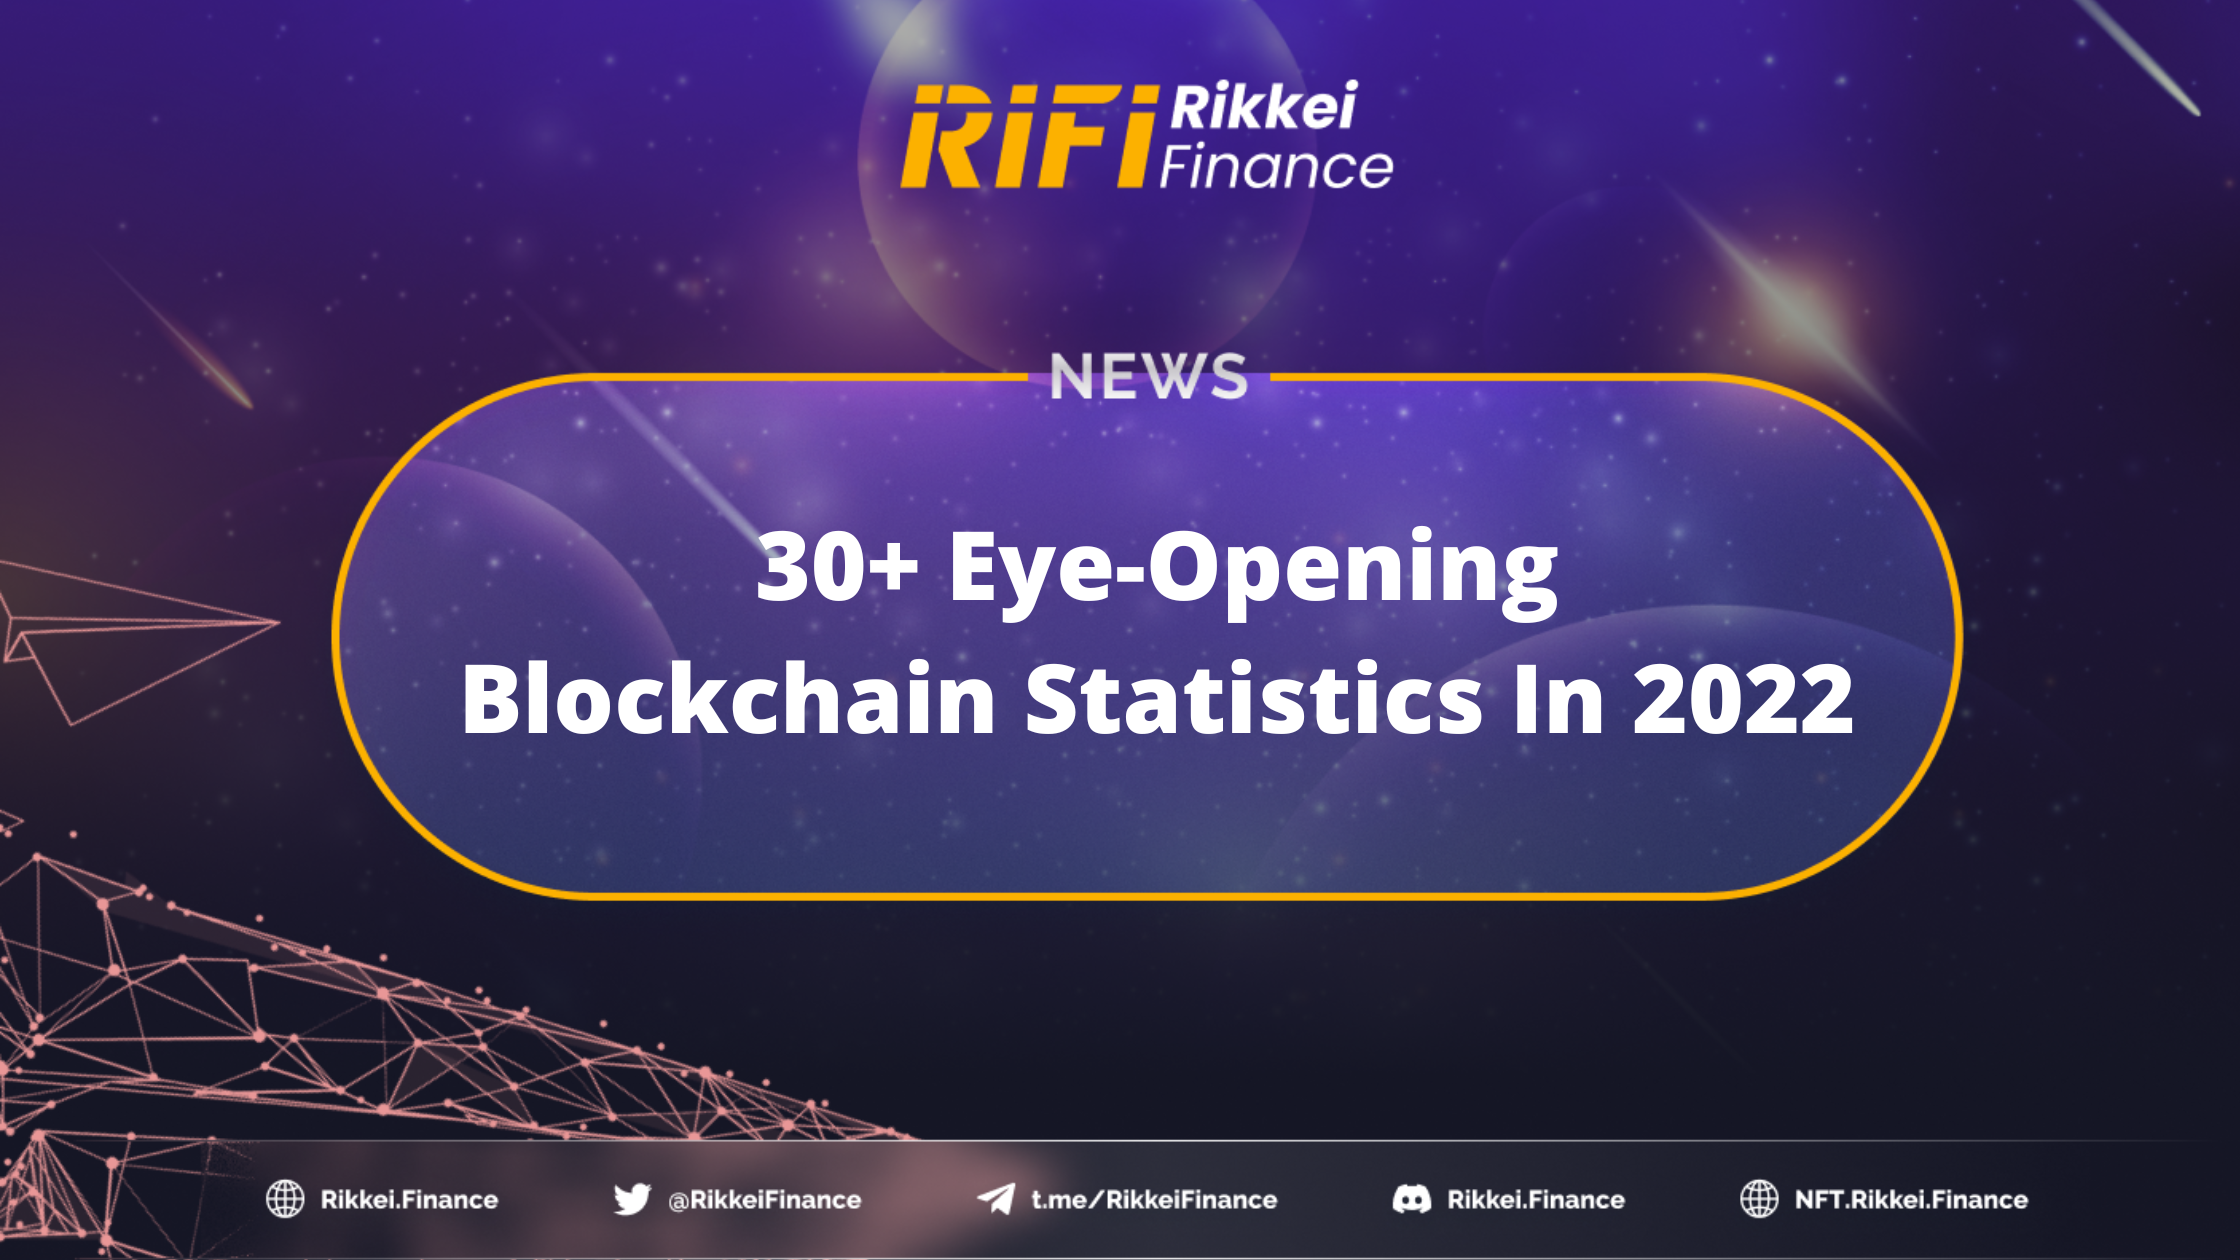  30+ Eye-Opening Blockchain Statistics In 2022